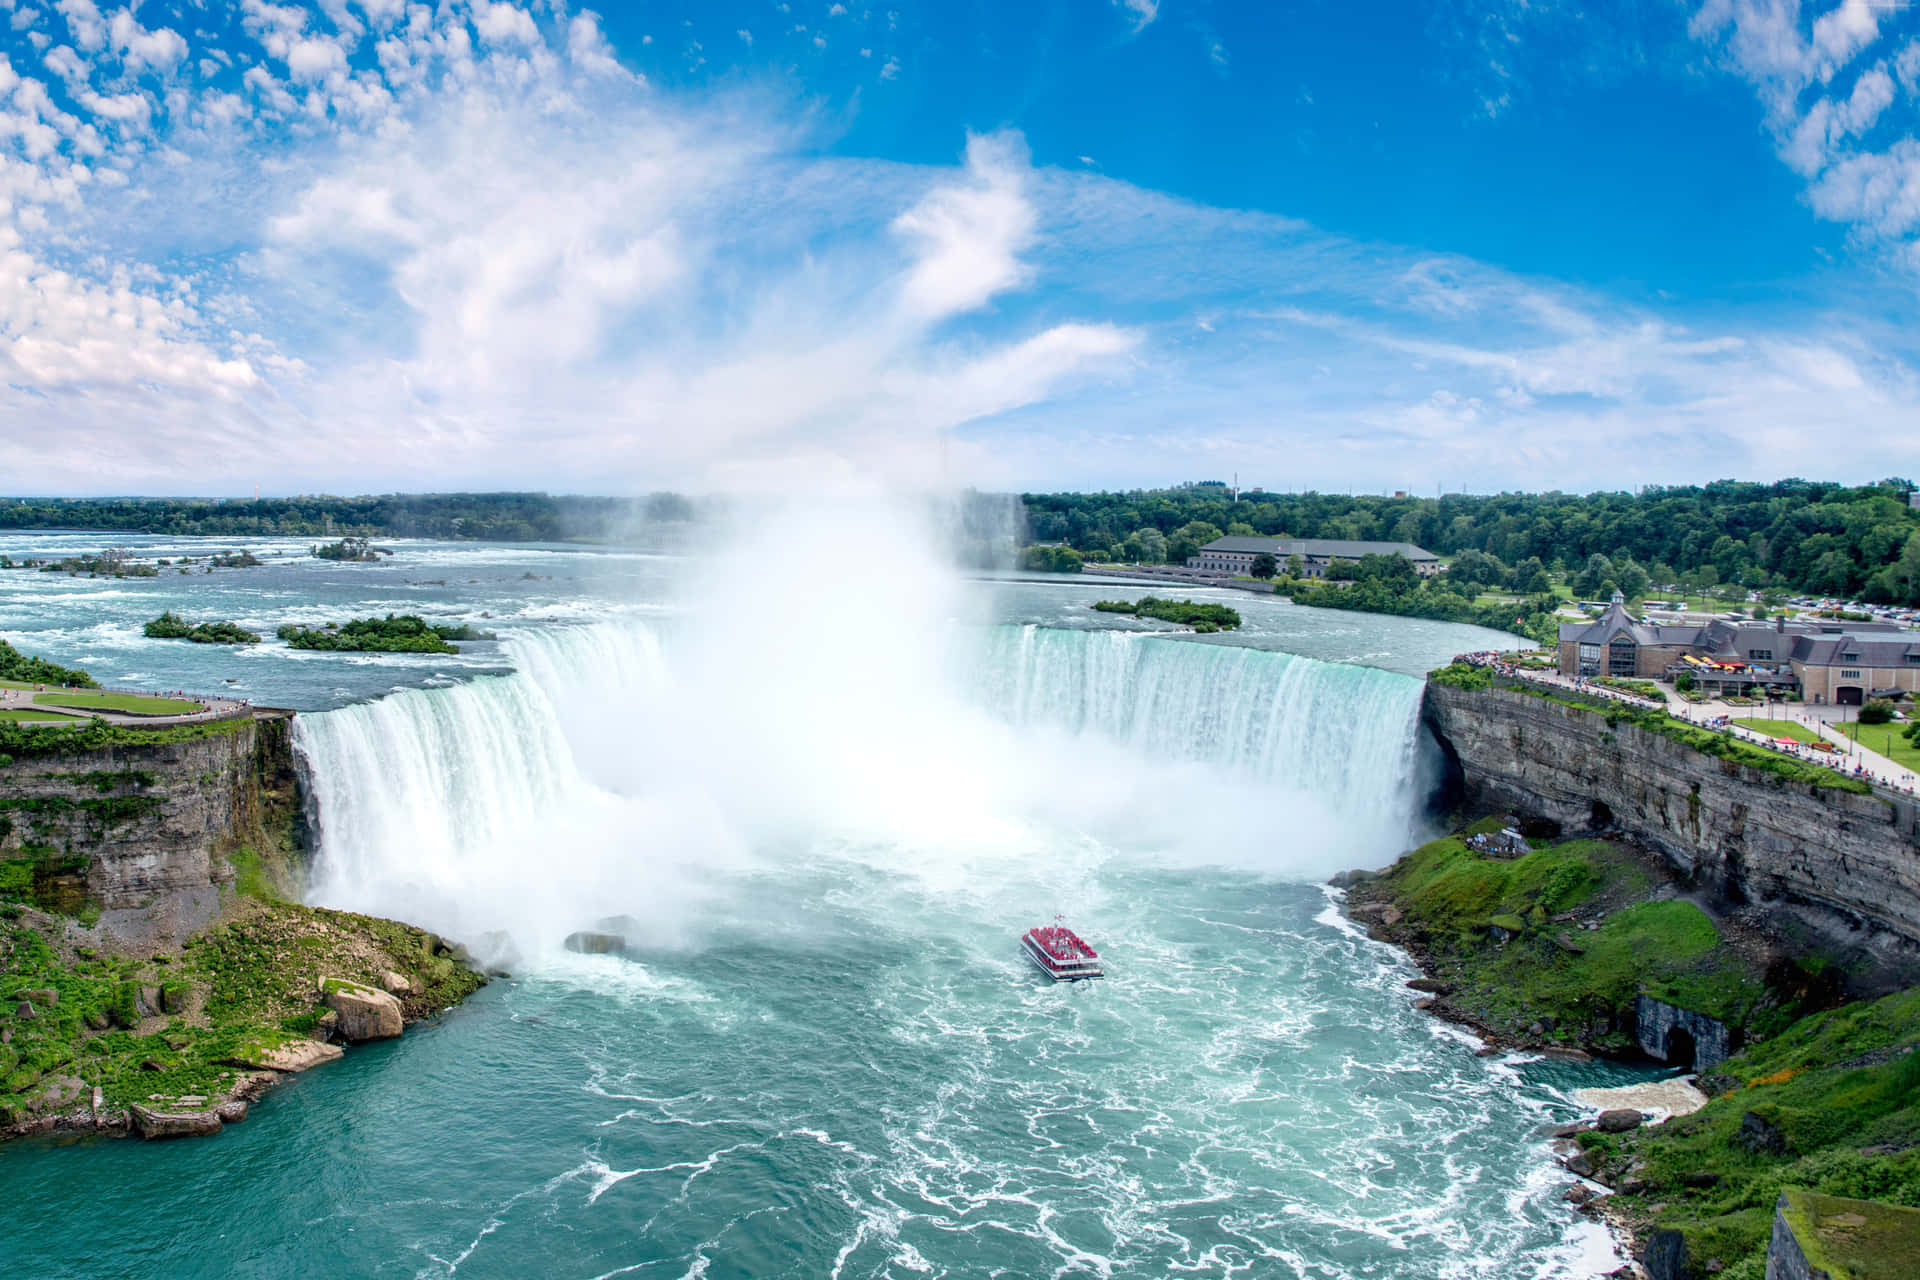 Observe the beauty of Niagara Falls